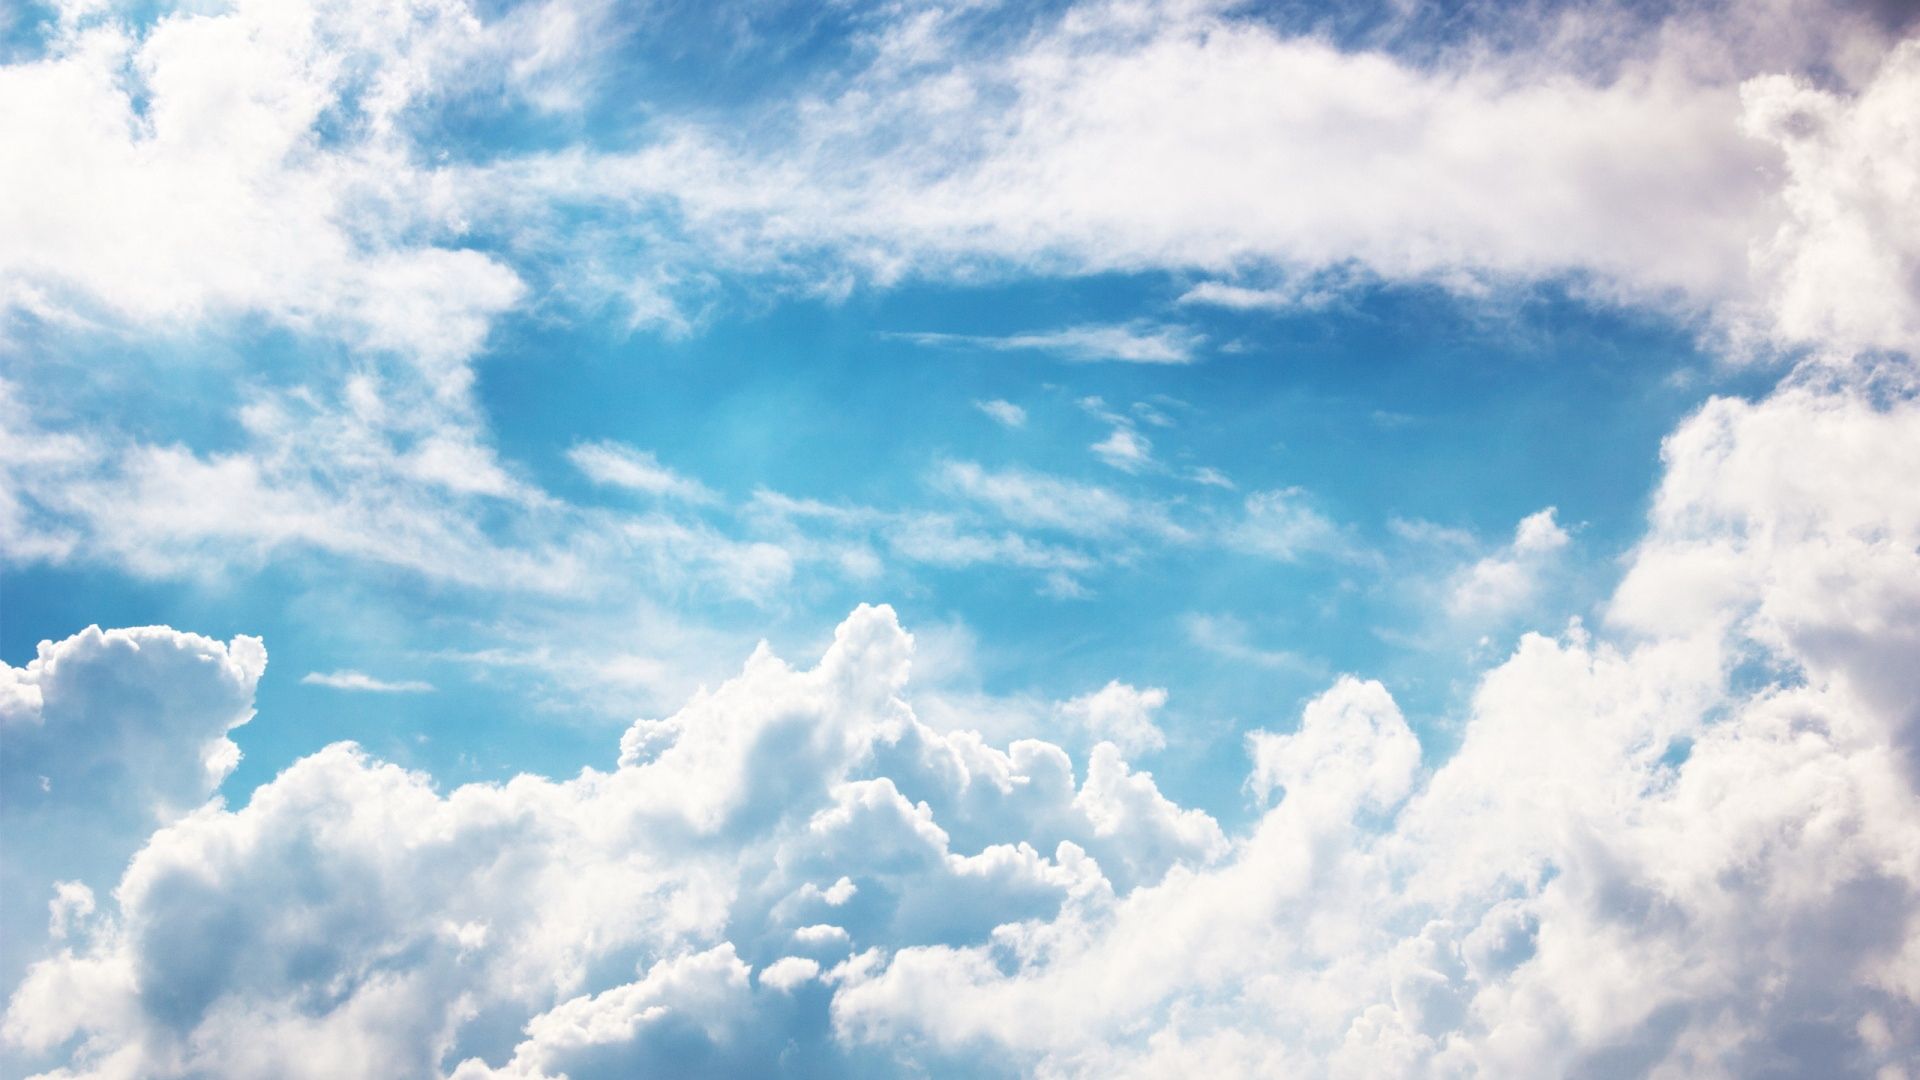 Sky and Clouds Wallpaper | wallpapers | Pinterest | Cloud wallpaper ...